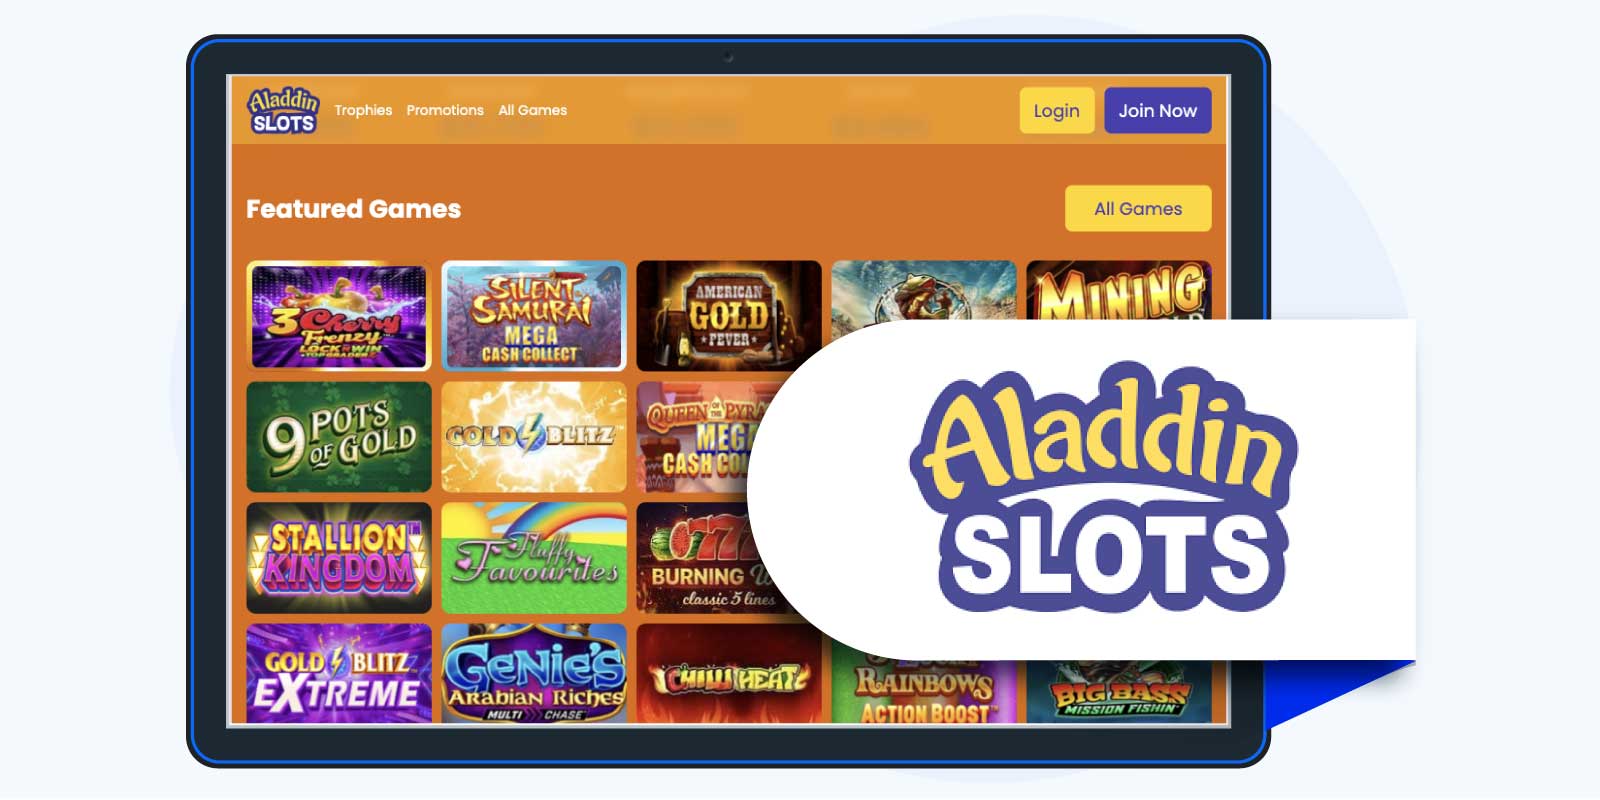 Aladdin Slots Casino- 5 No deposit free spins add card